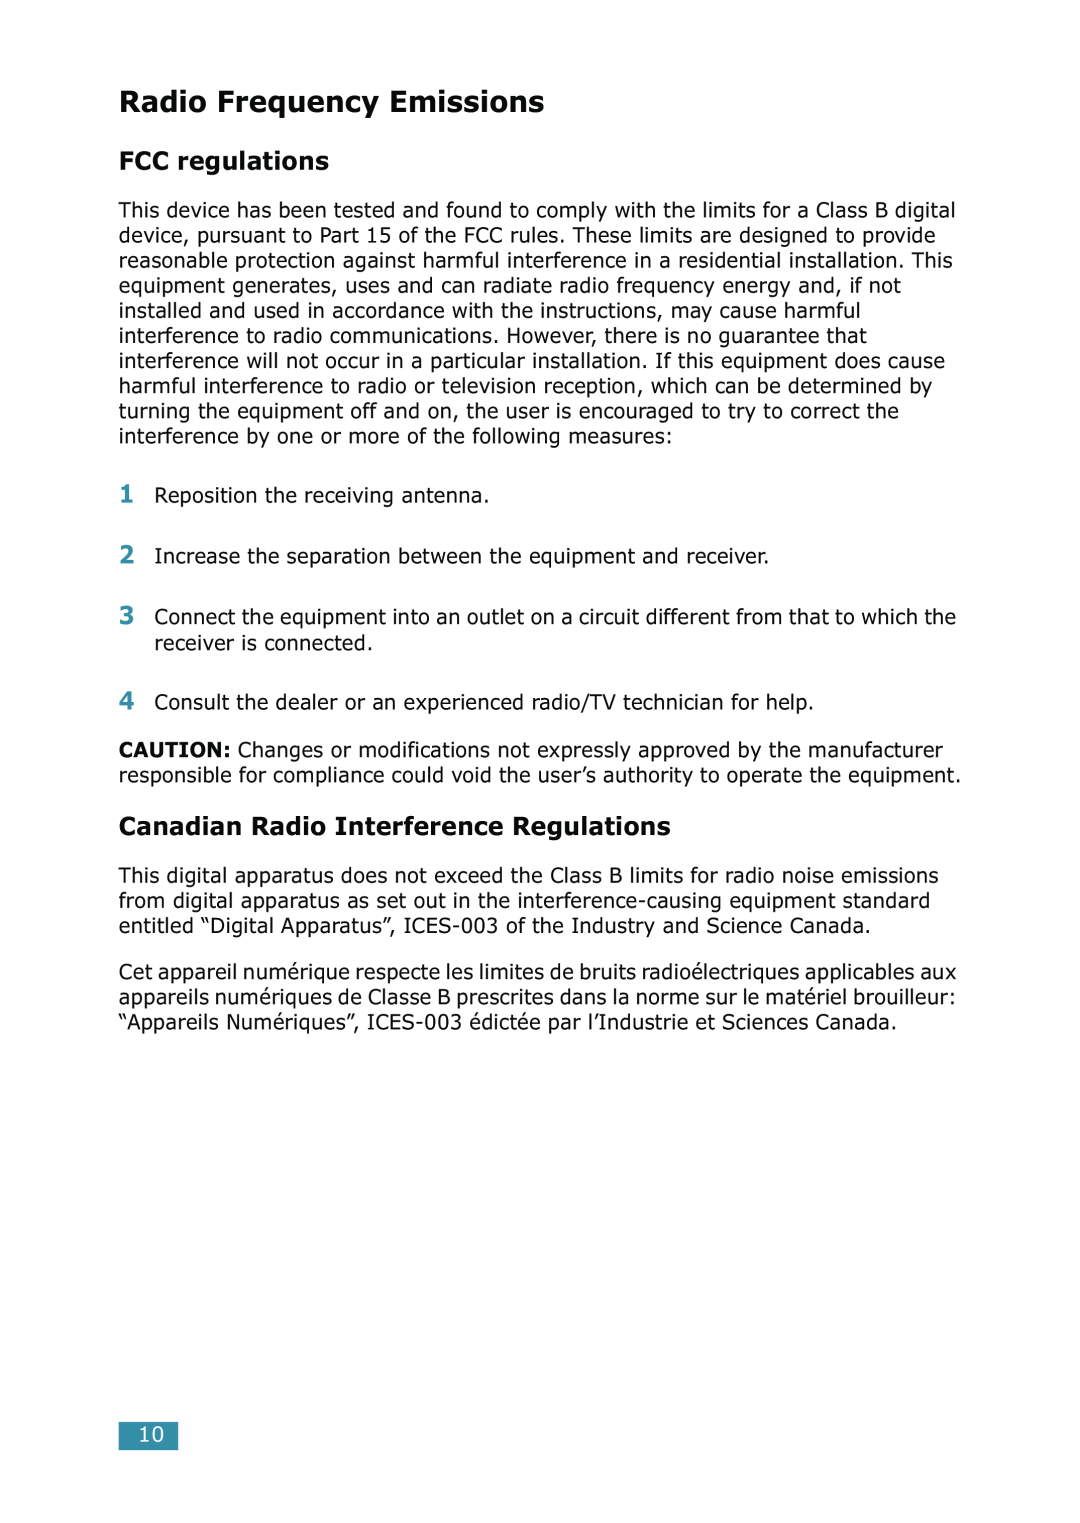 Samsung ML-1520 manual Radio Frequency Emissions, FCC regulations, Canadian Radio Interference Regulations 